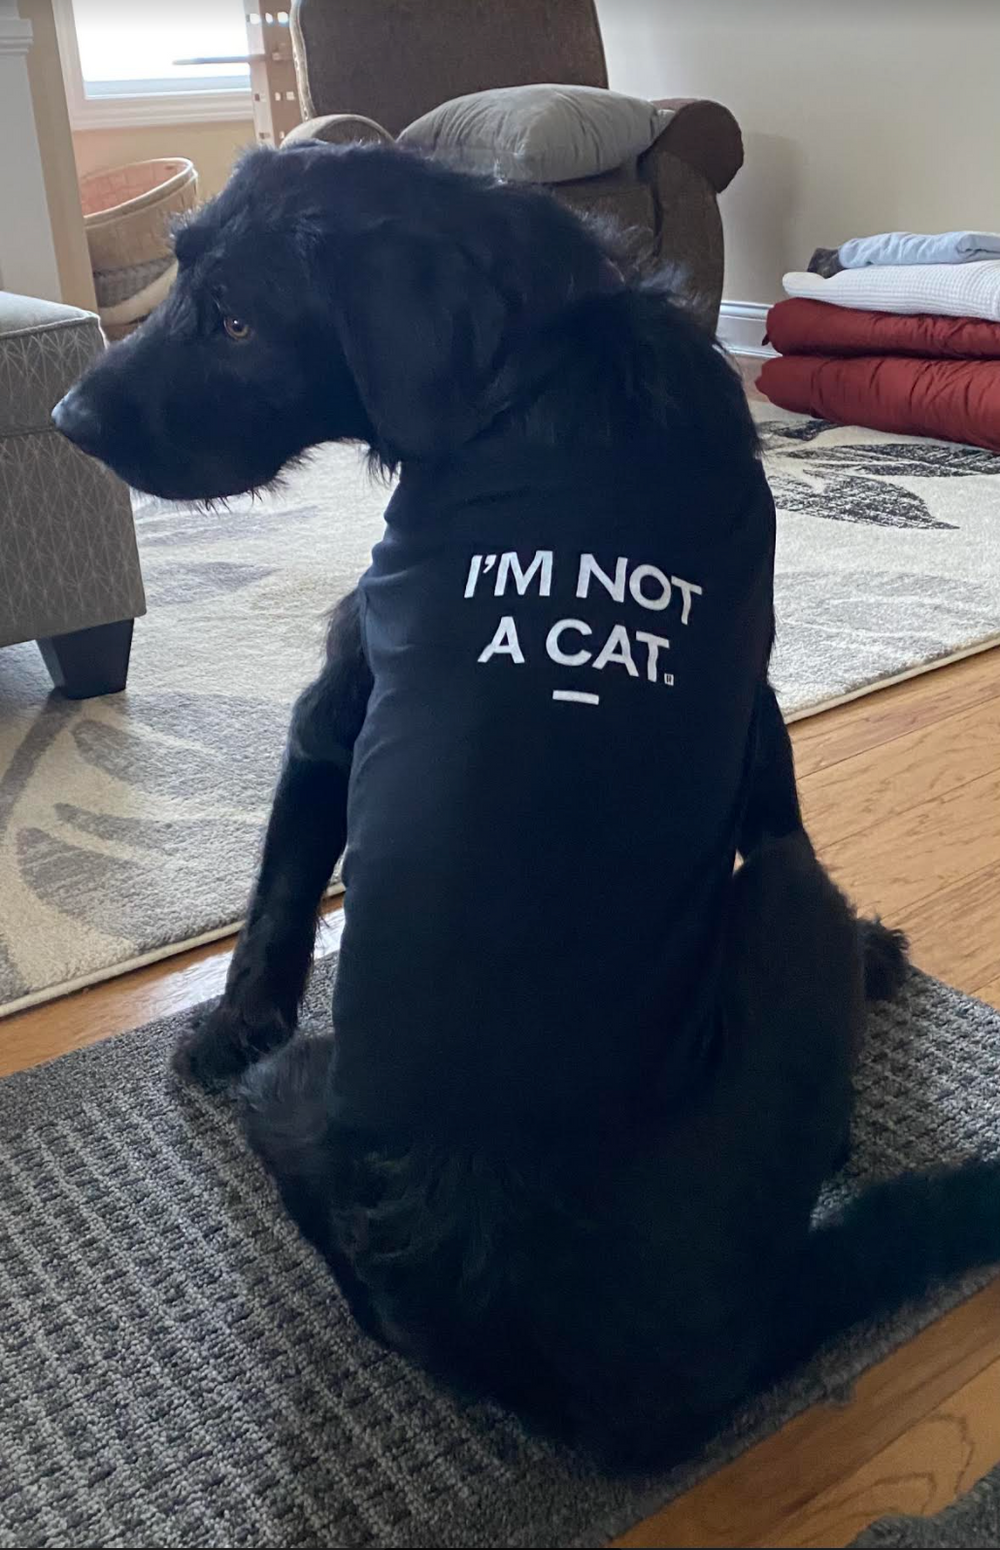 I'm Not A Cat Dog Shirt